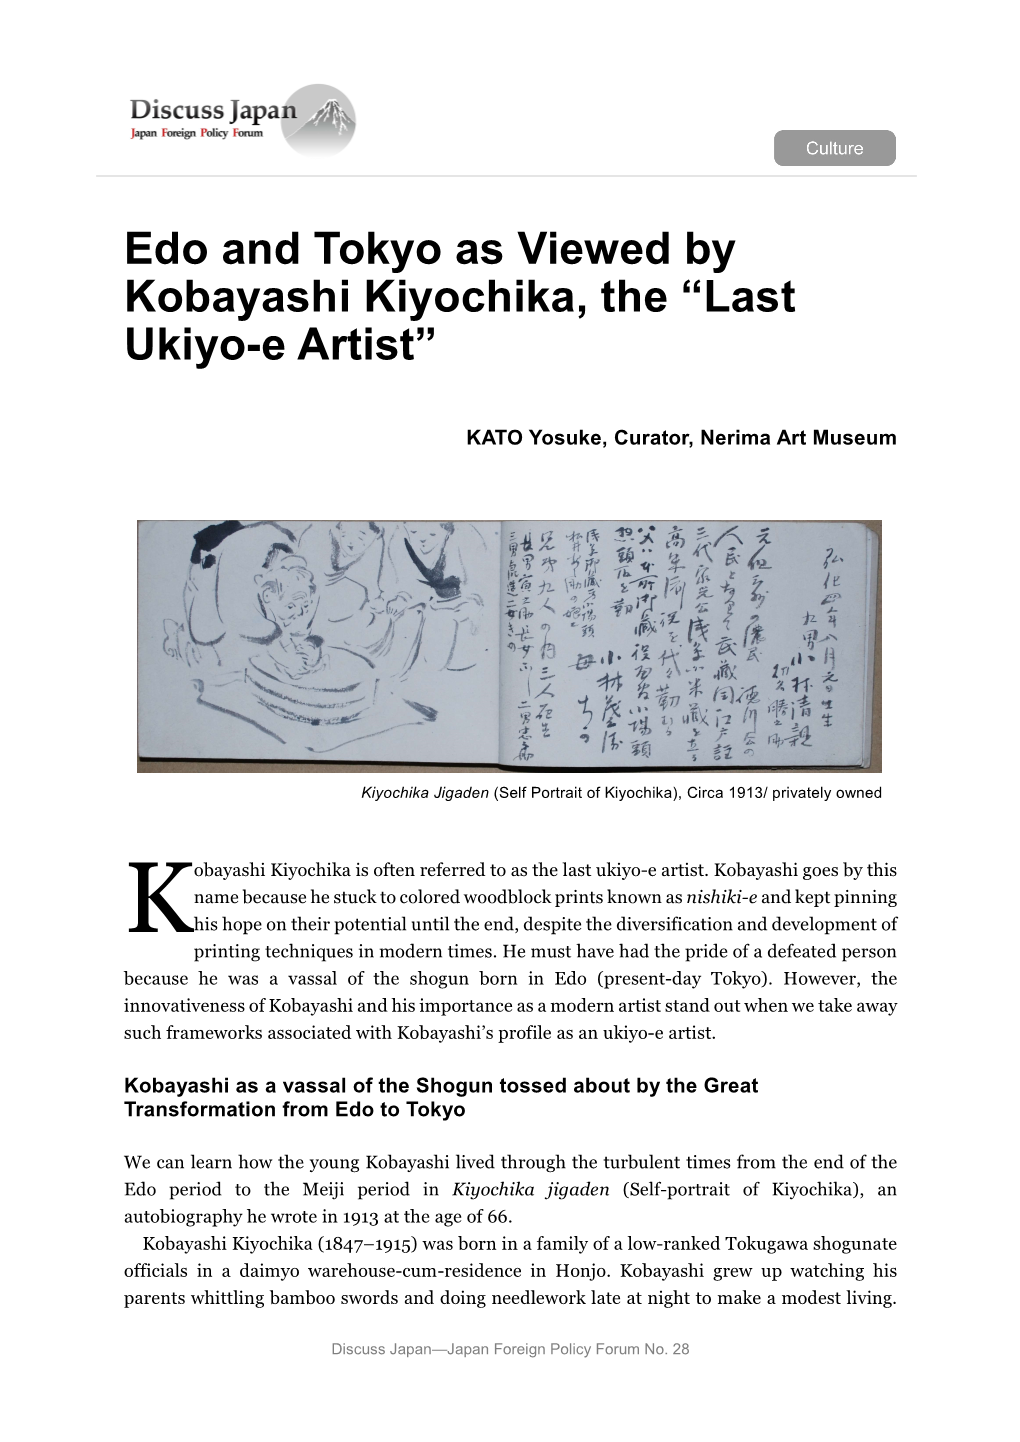 Edo and Tokyo As Viewed by Kobayashi Kiyochika, the “Last Ukiyo-E Artist”